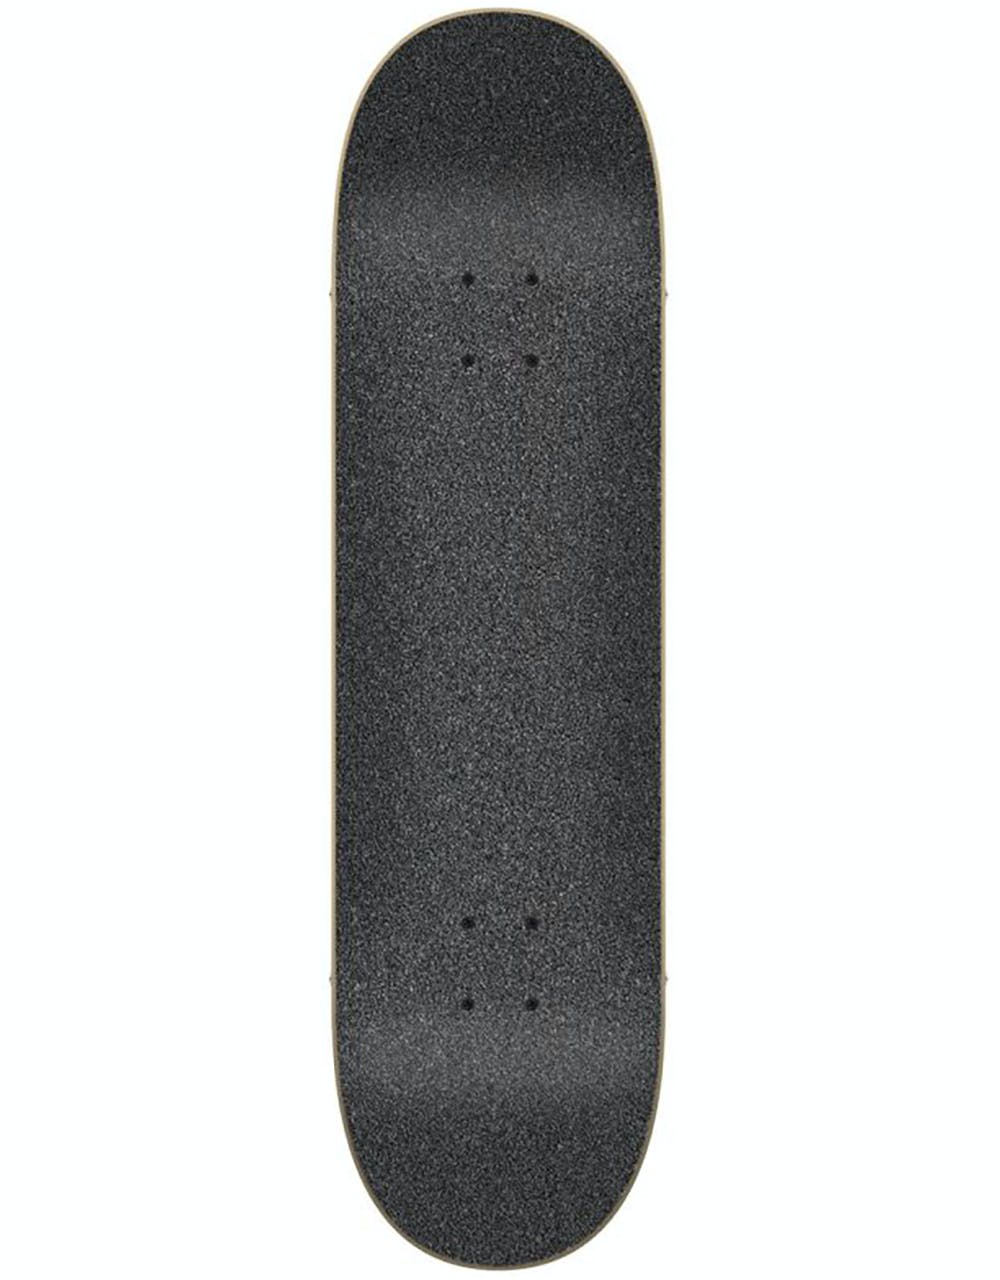 Flip Quattro Complete Skateboard - 7.88"